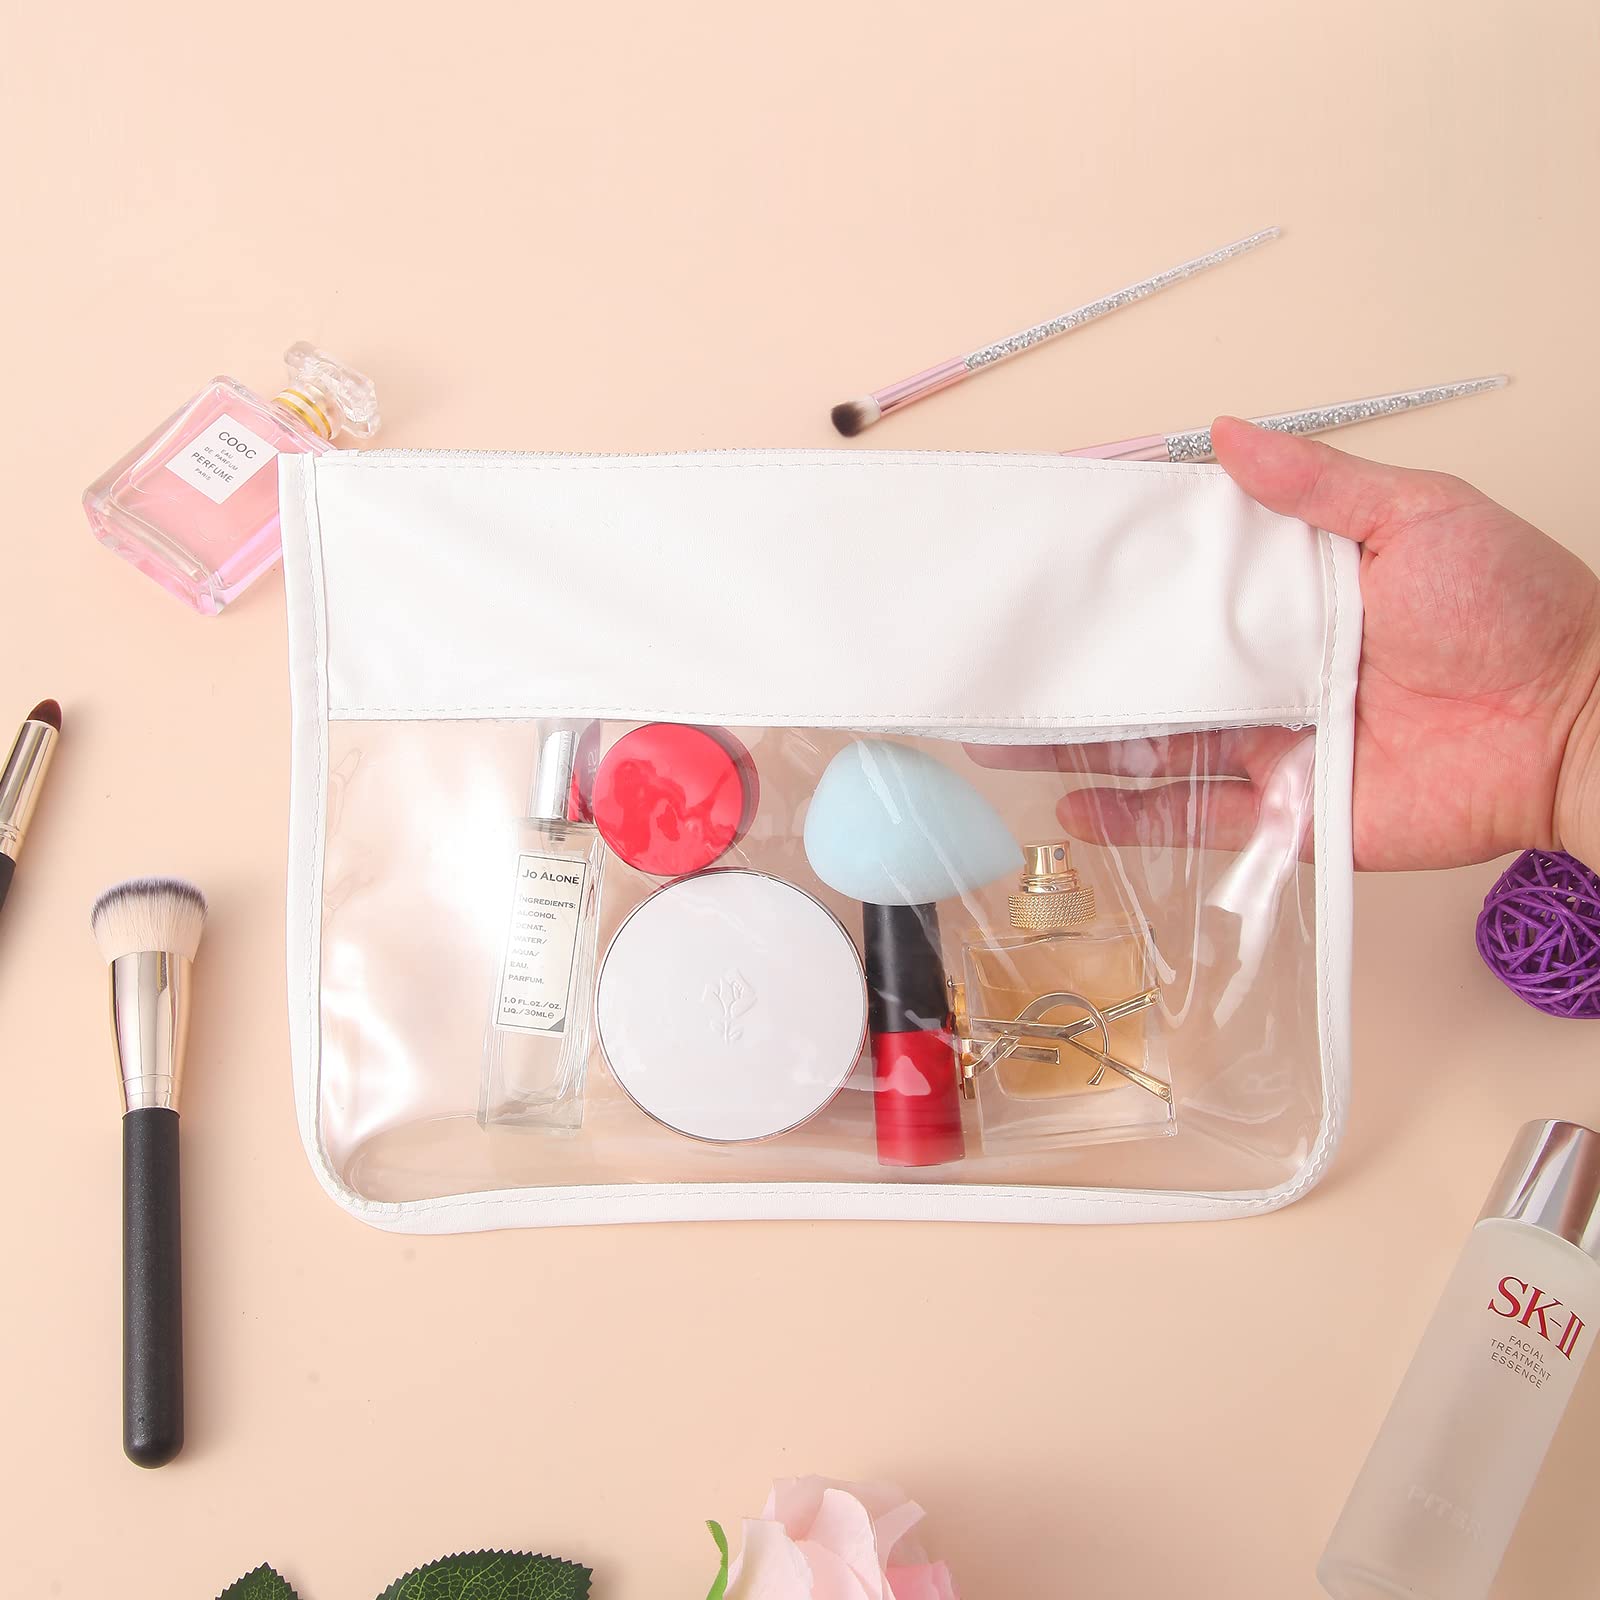 Makeup Bag Waterproof Leather Cosmetic Bag Toiletry Bag,DIY Chenille Letter Bag Nvlon Clear Travel Makeup Bag for Women Girls (White)